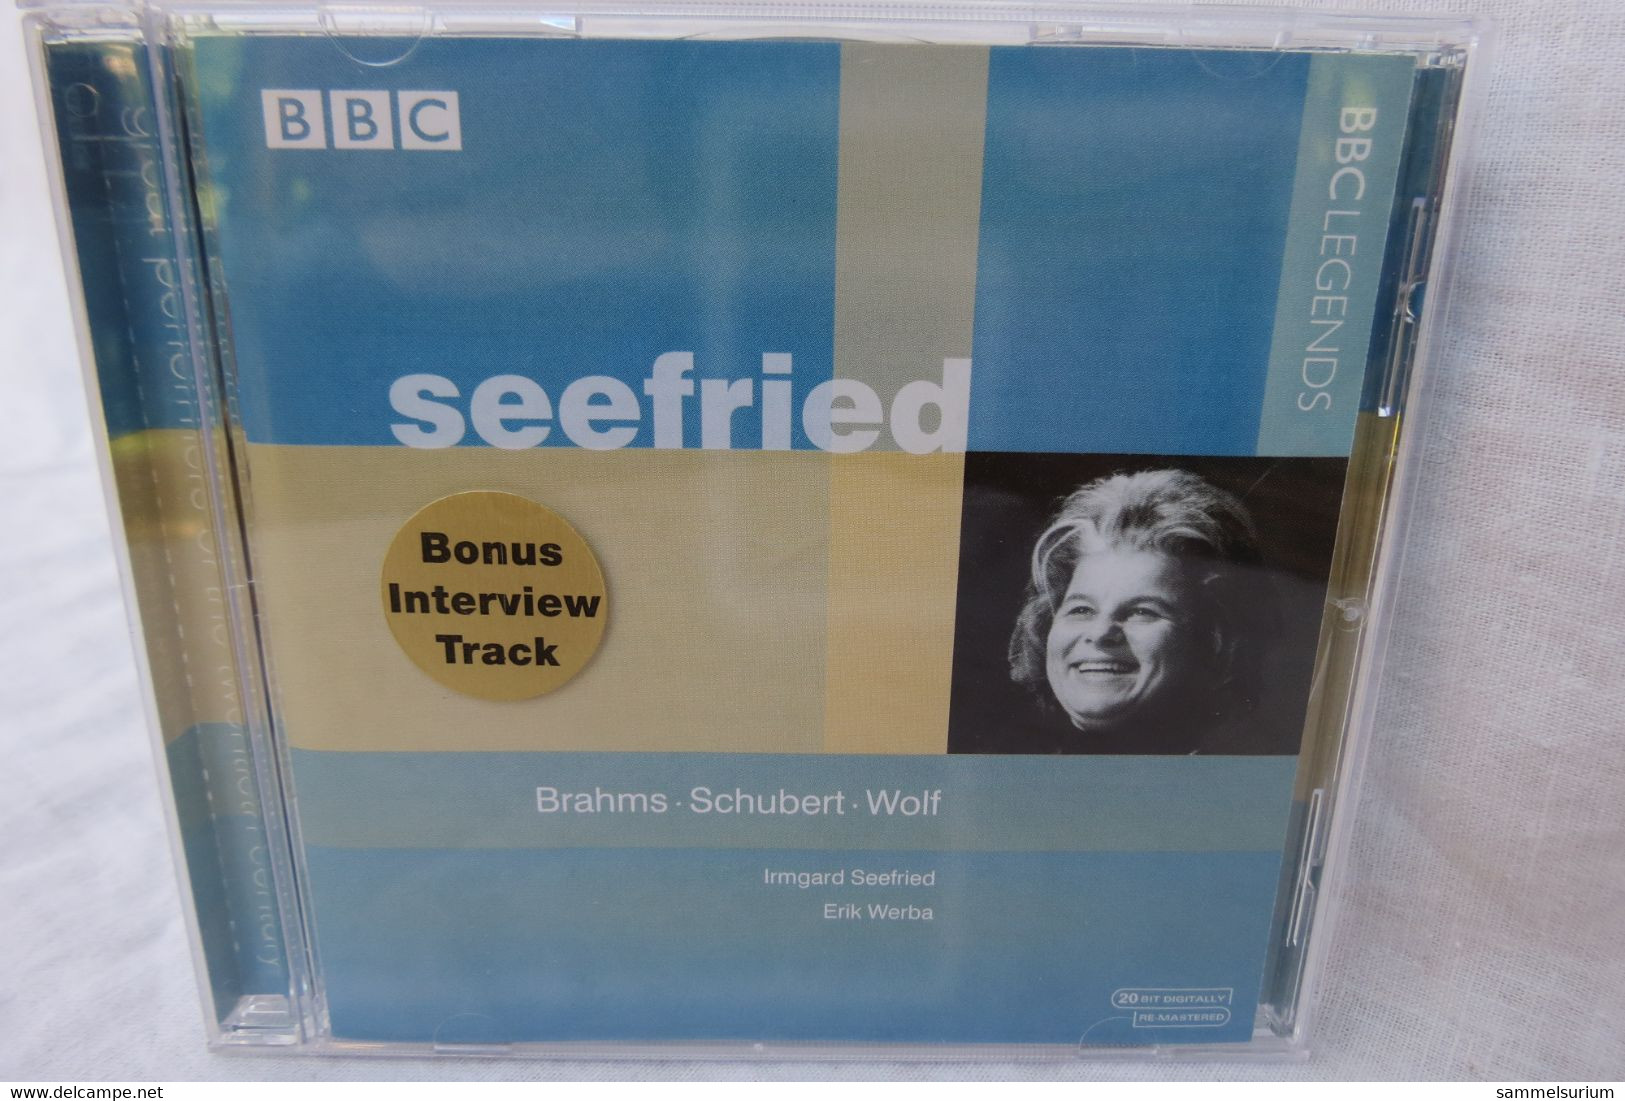 CD "Irmgard Seefried" Brahms, Schubert, Wolf, BBC Legenden - Opera / Operette